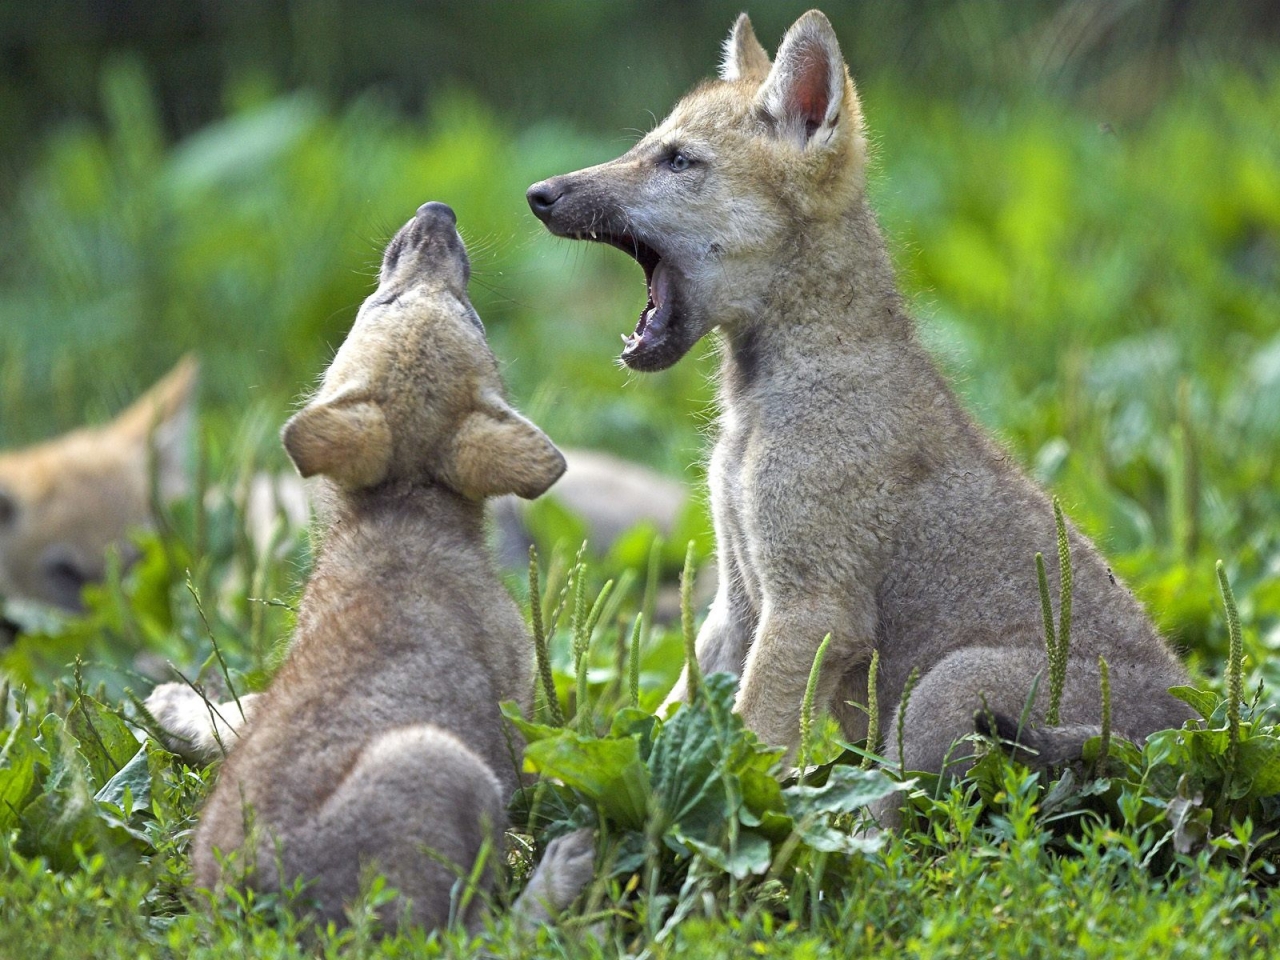 Young Wolf Cubs Desktop Wallpaper Pictures Photos